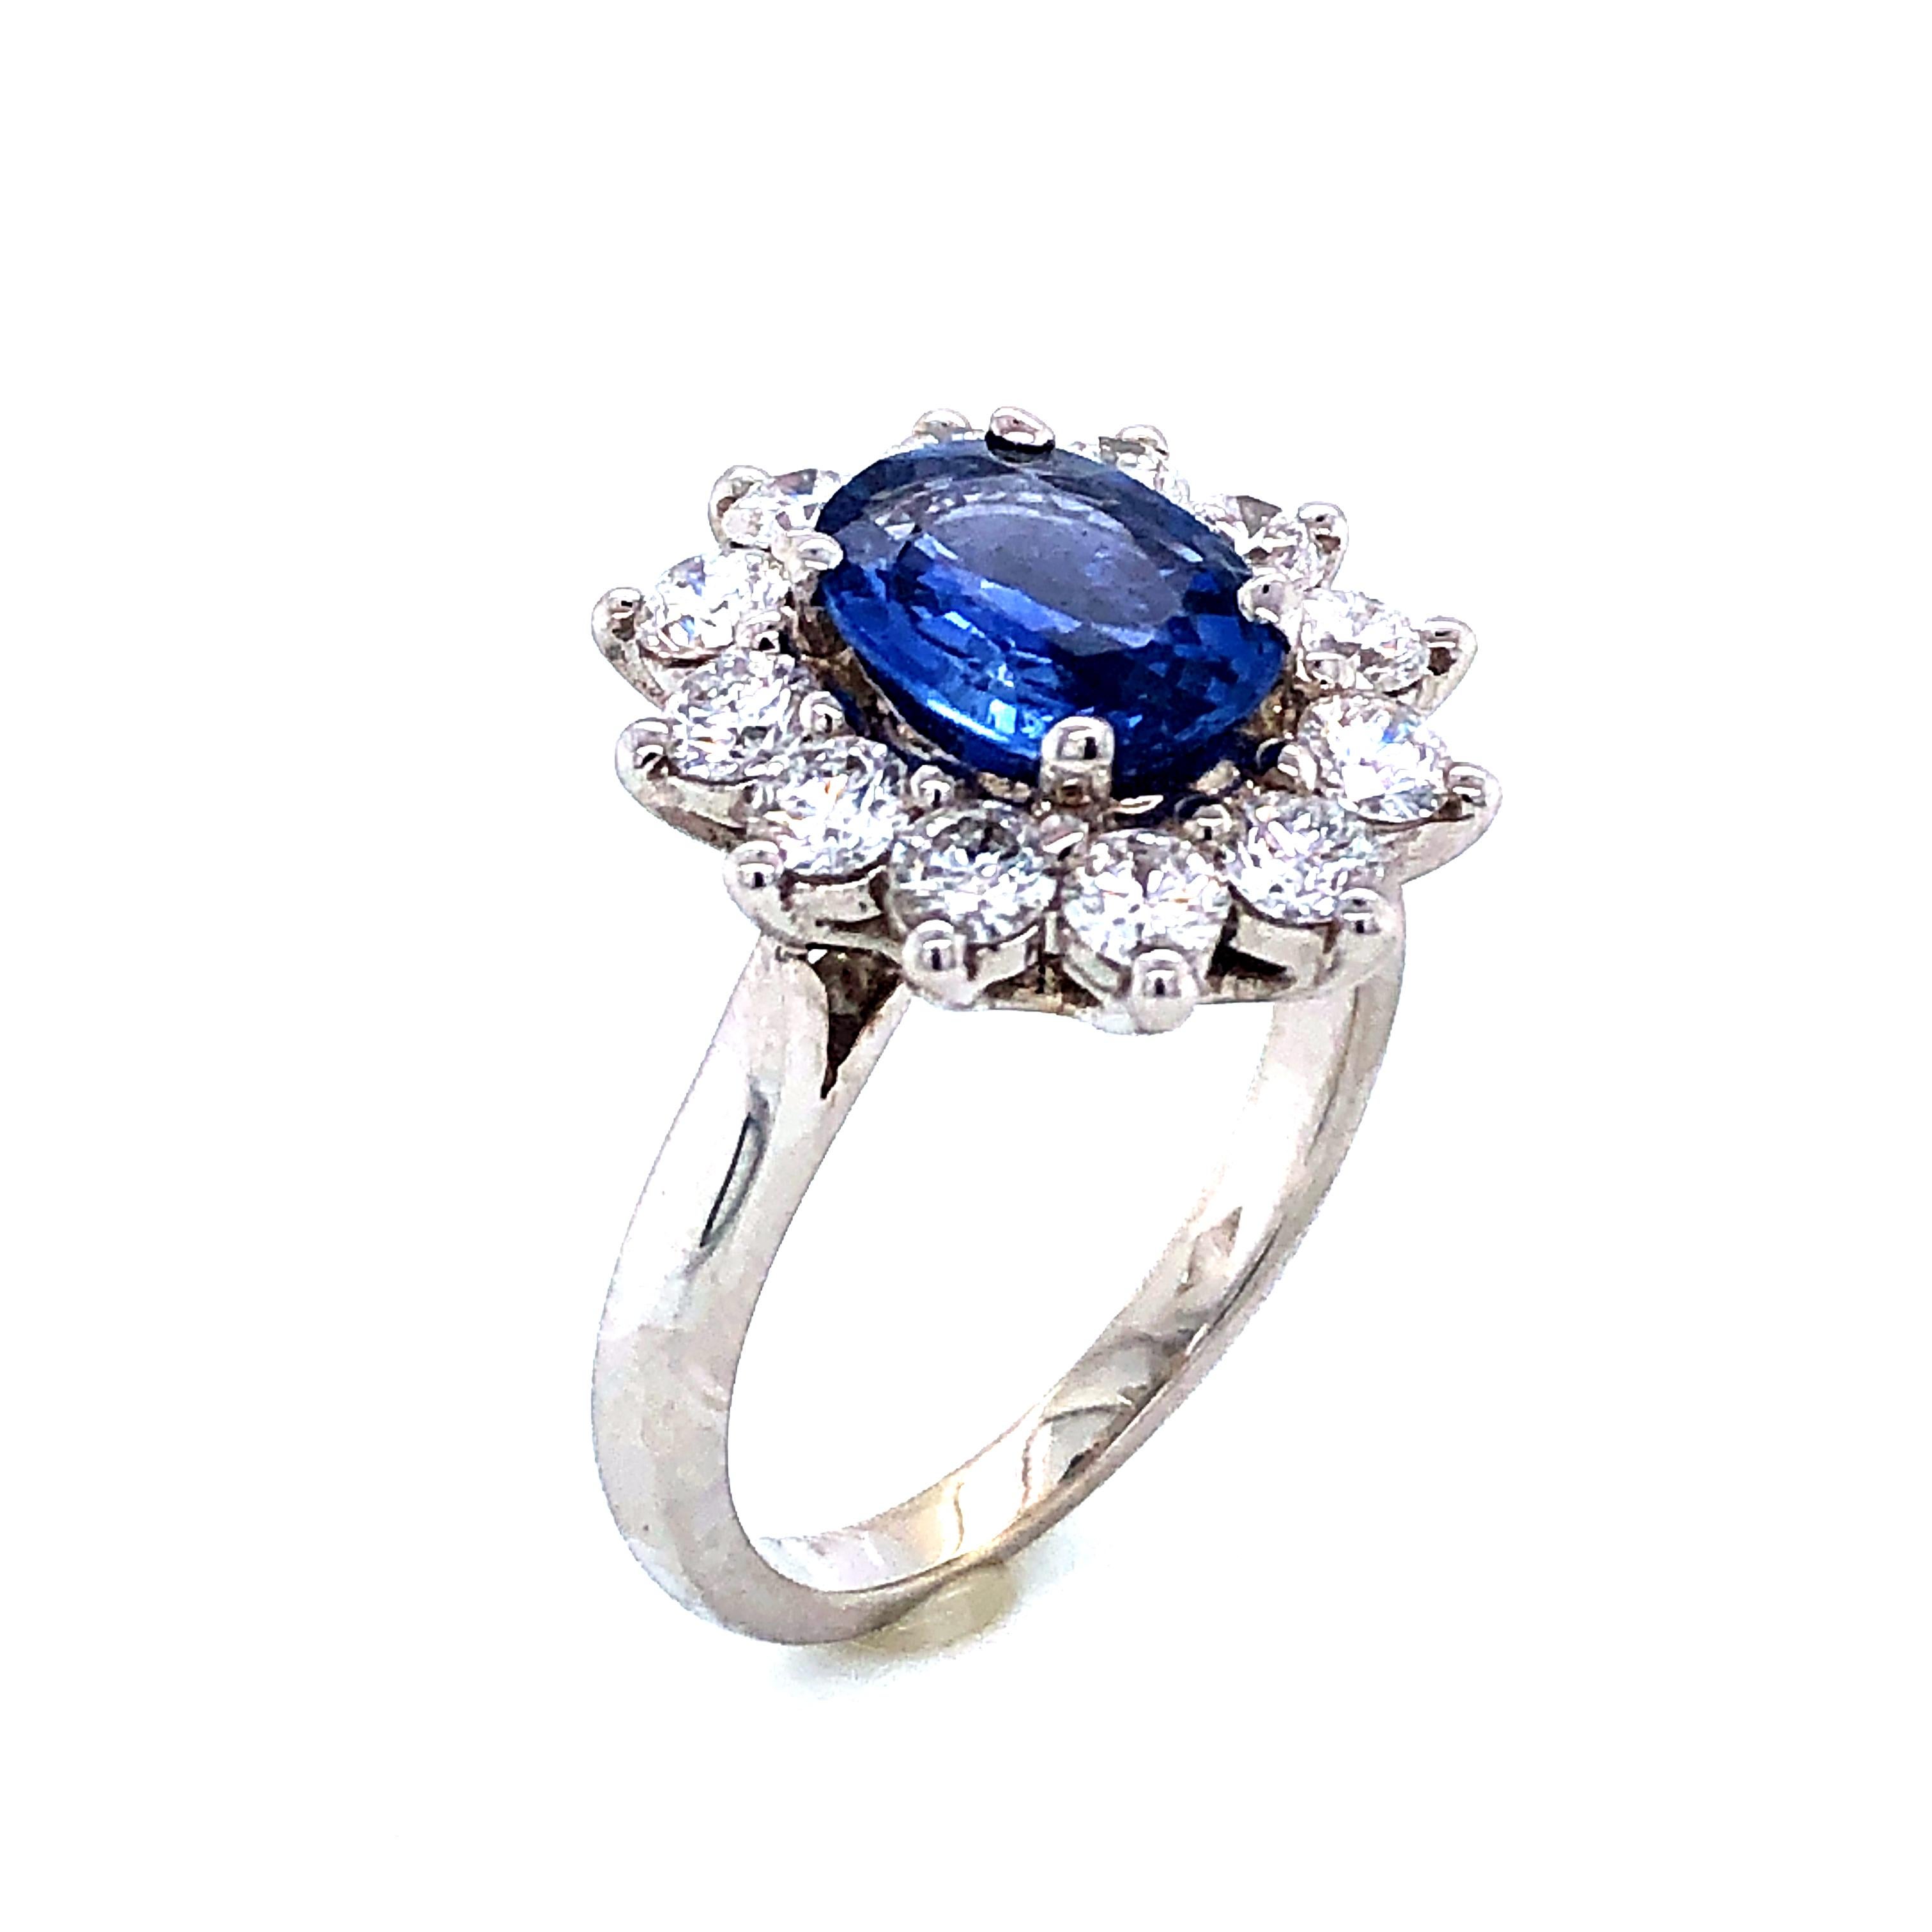 Brilliant Cut Royal Ceylon Sapphire and White Diamonds on White Gold Engagement Ring